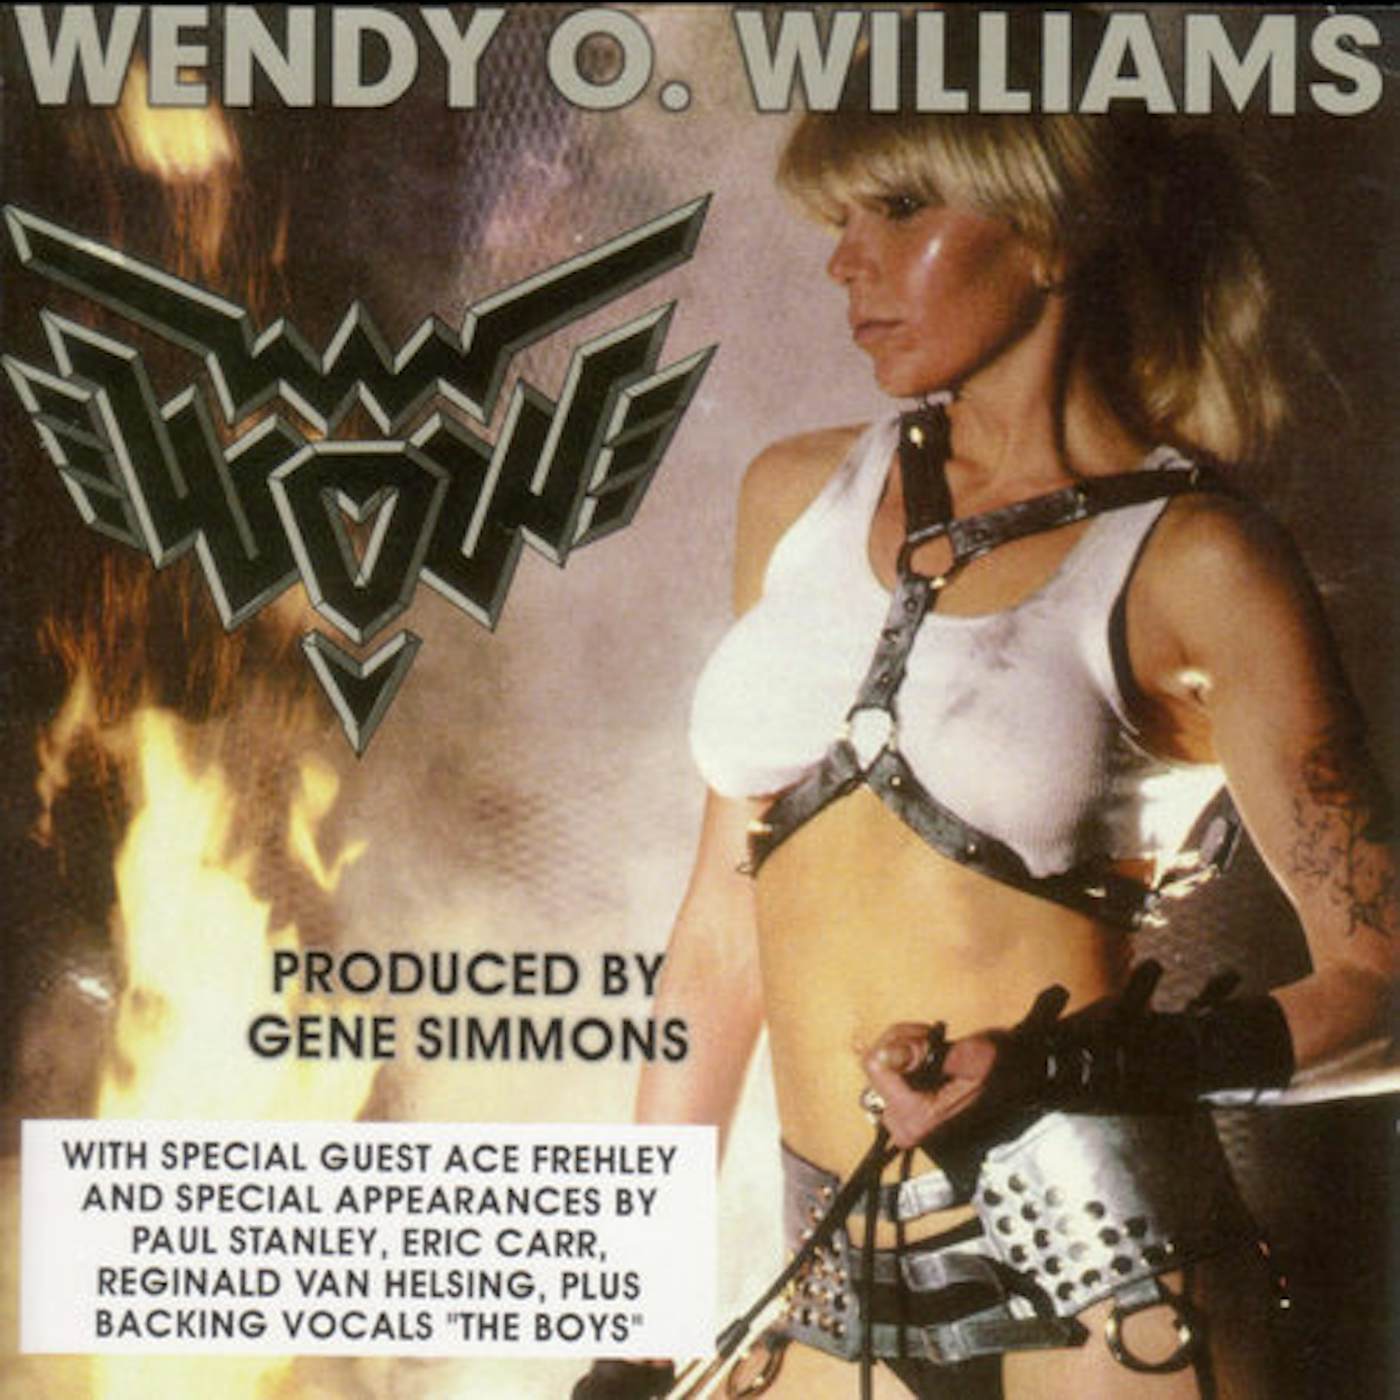 Wendy O. Williams WOW CD